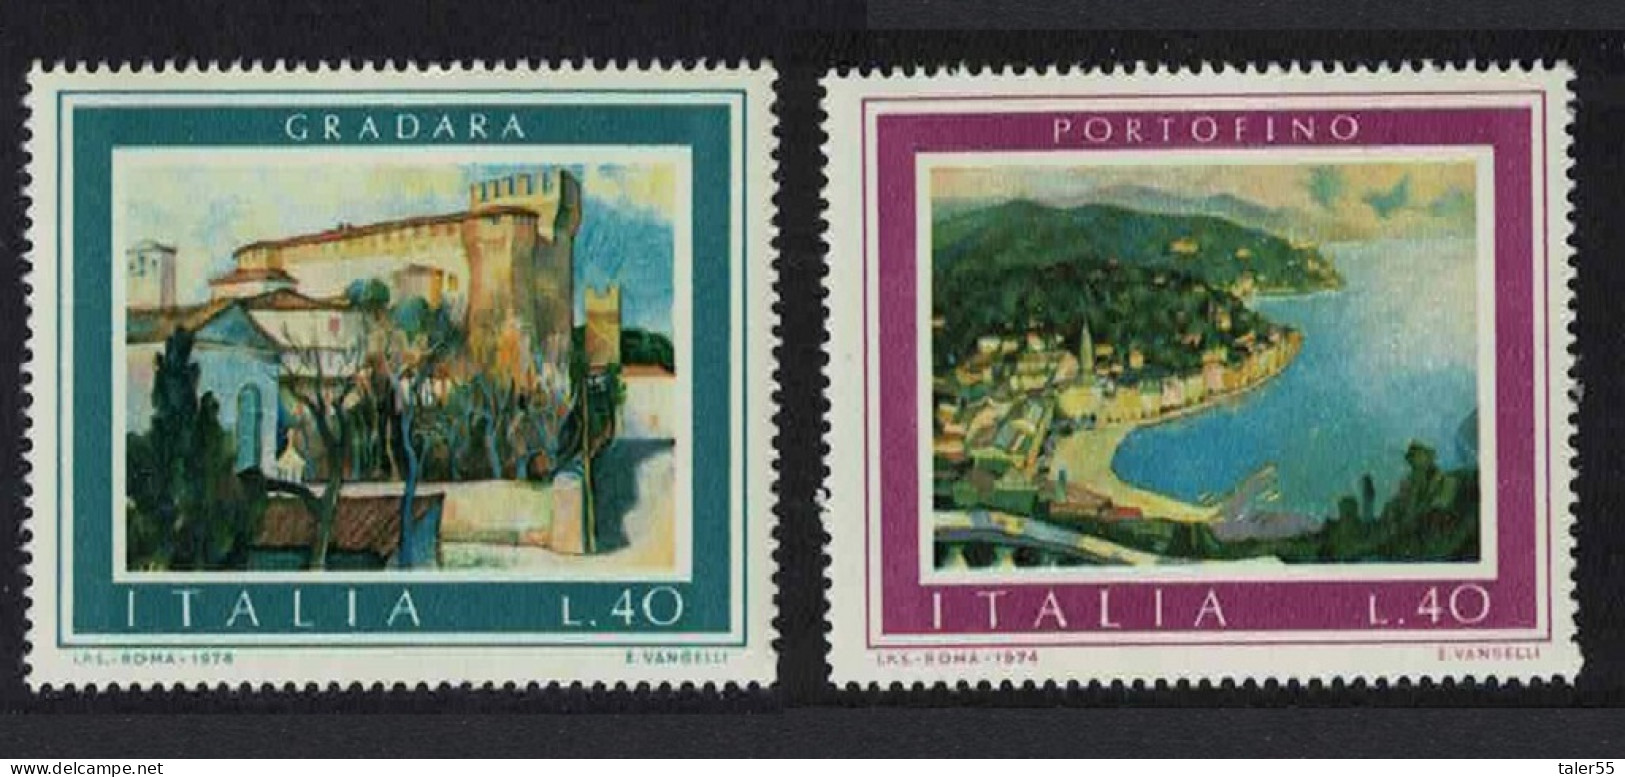 Italy Tourist Publicity Portofino Gradara 1st Series 2v 1974 MNH SG#1407-1408 - 1971-80: Mint/hinged